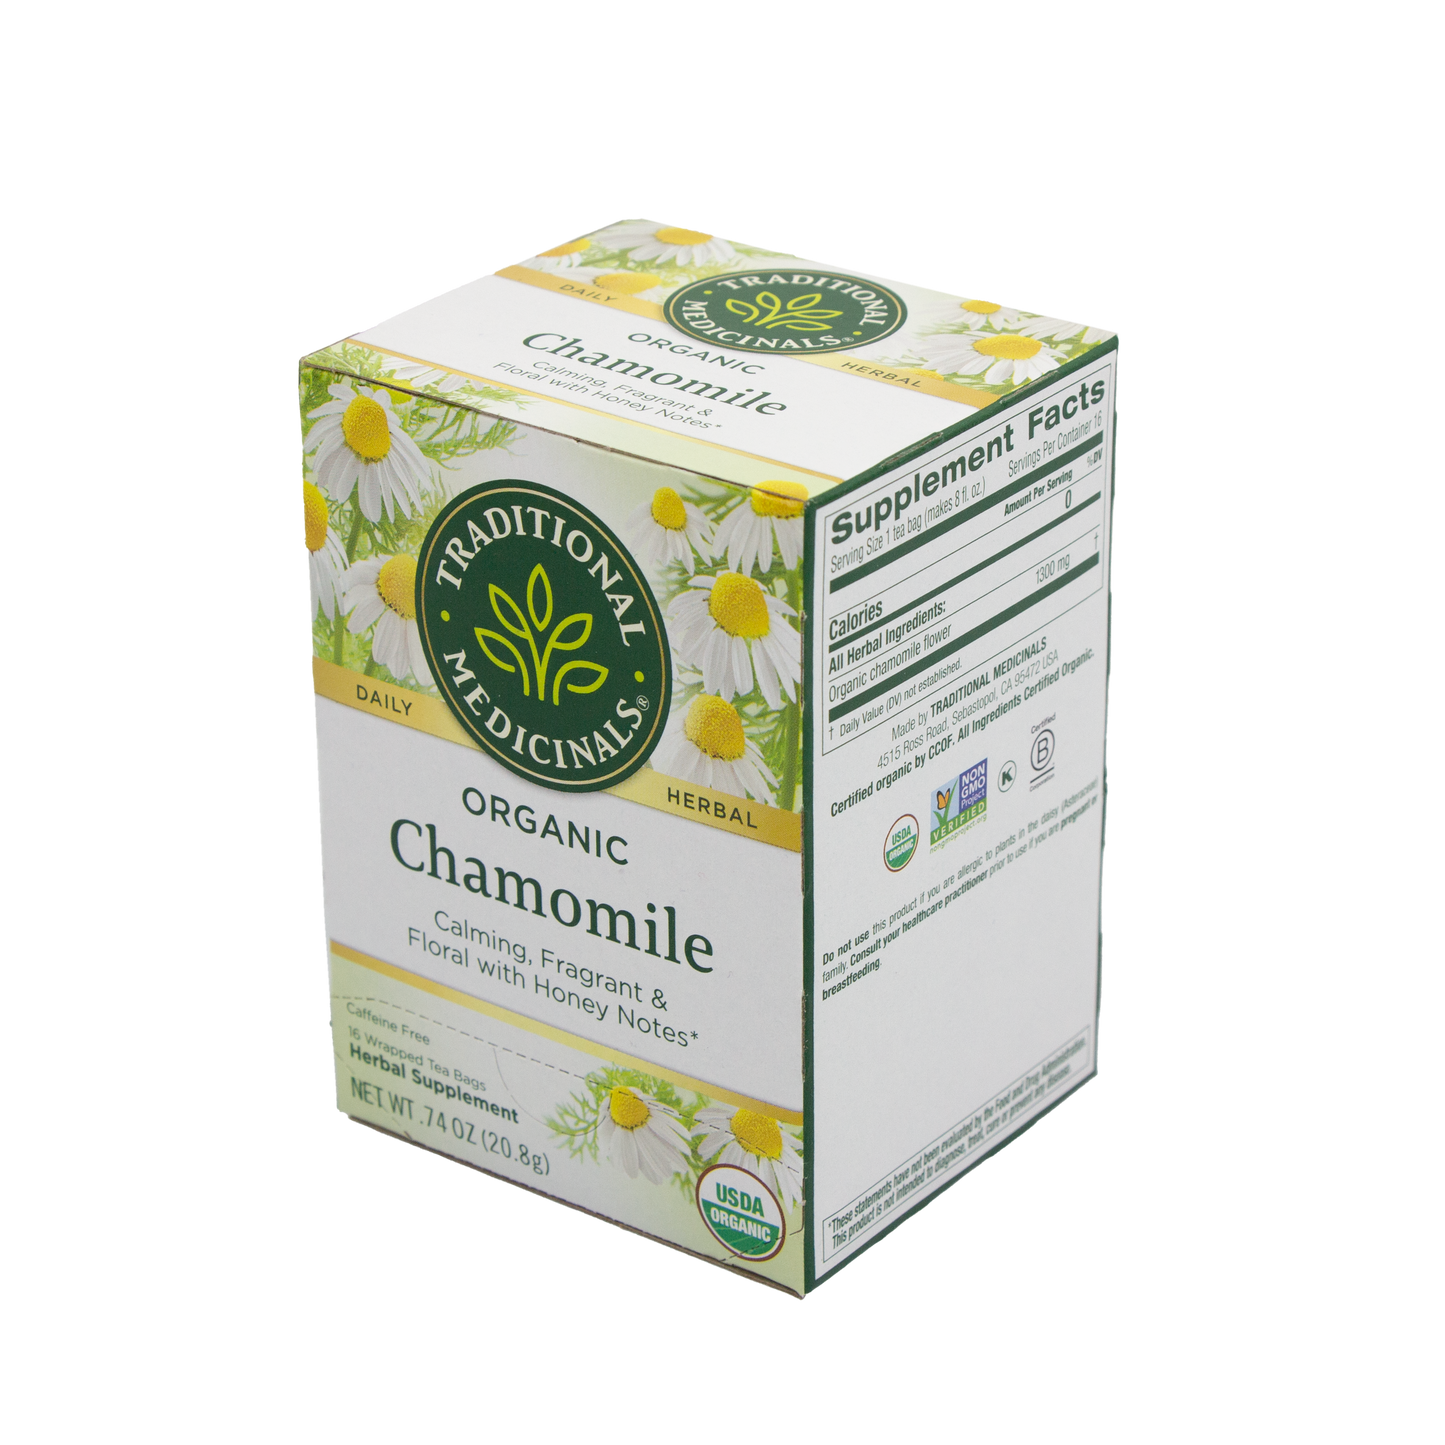 Traditional Medicinals - Organic Chamomile